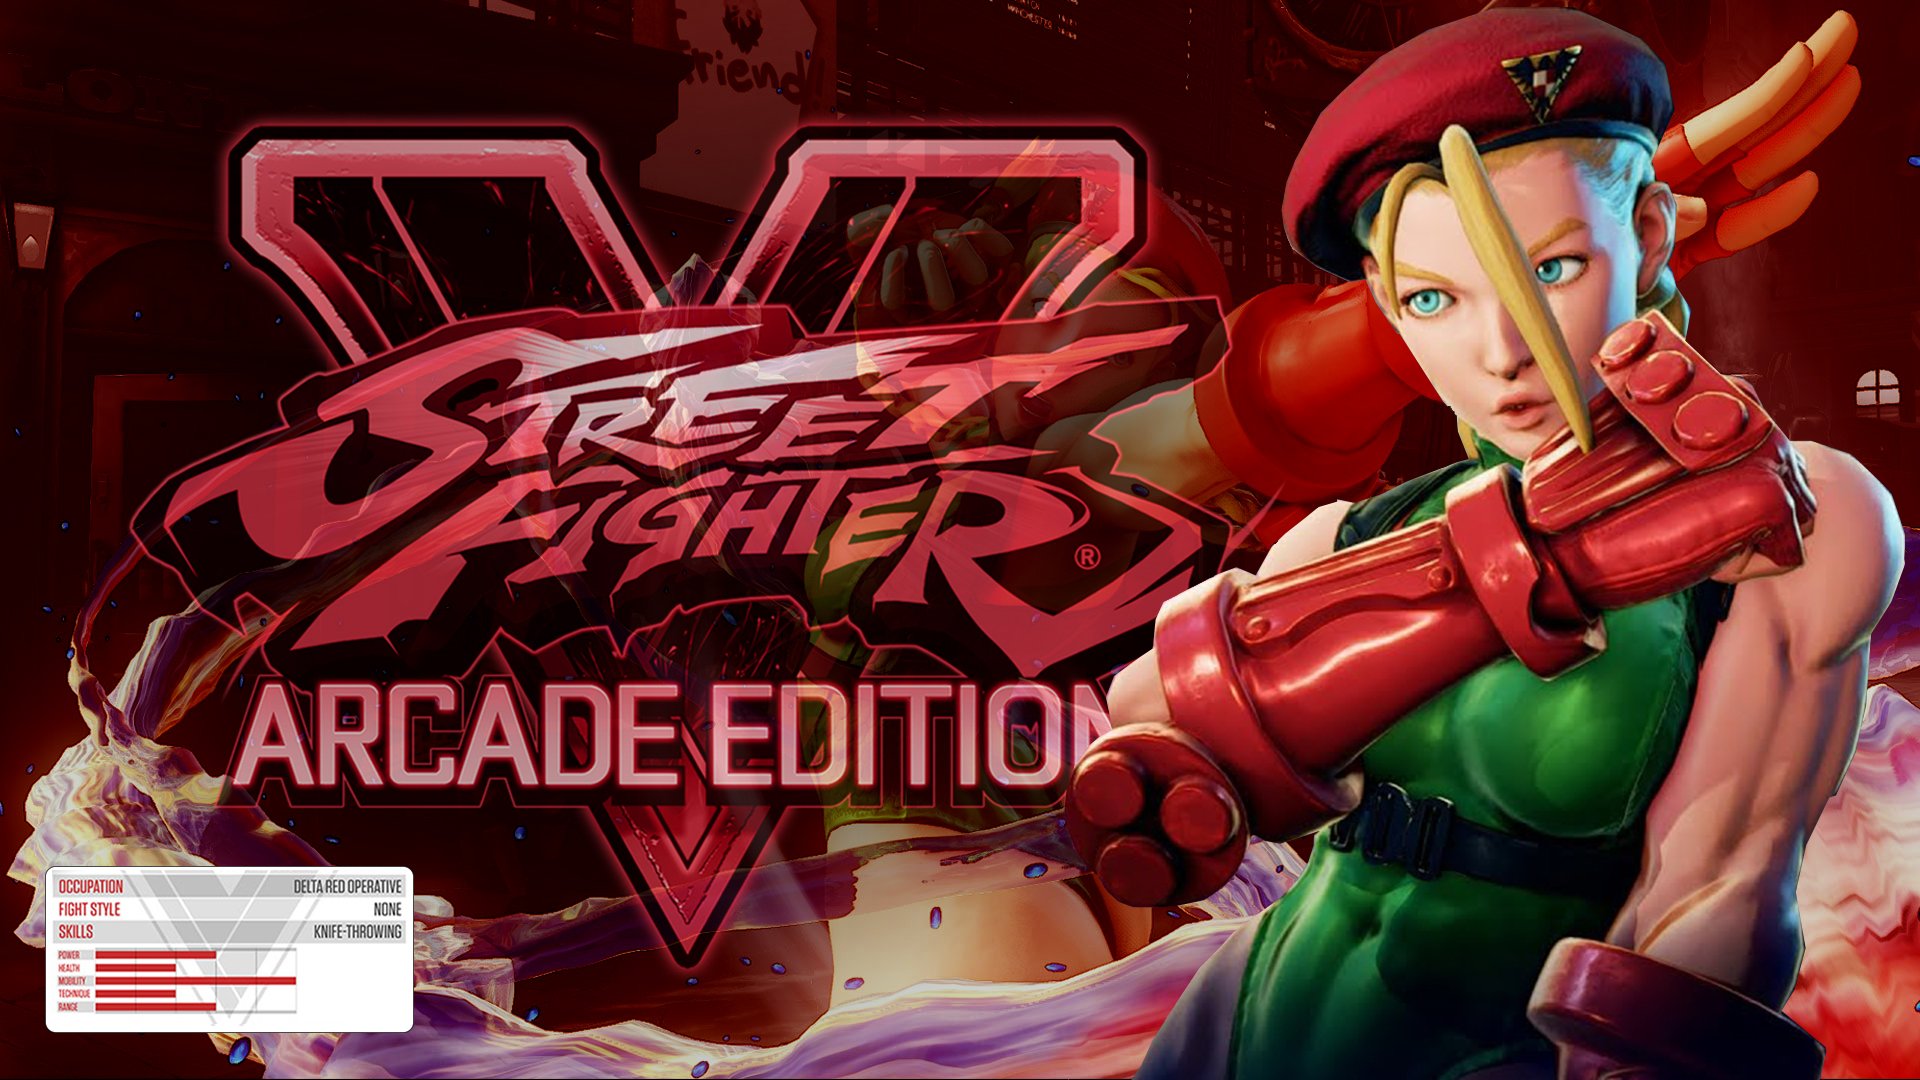 Cammy: Street Fighter V